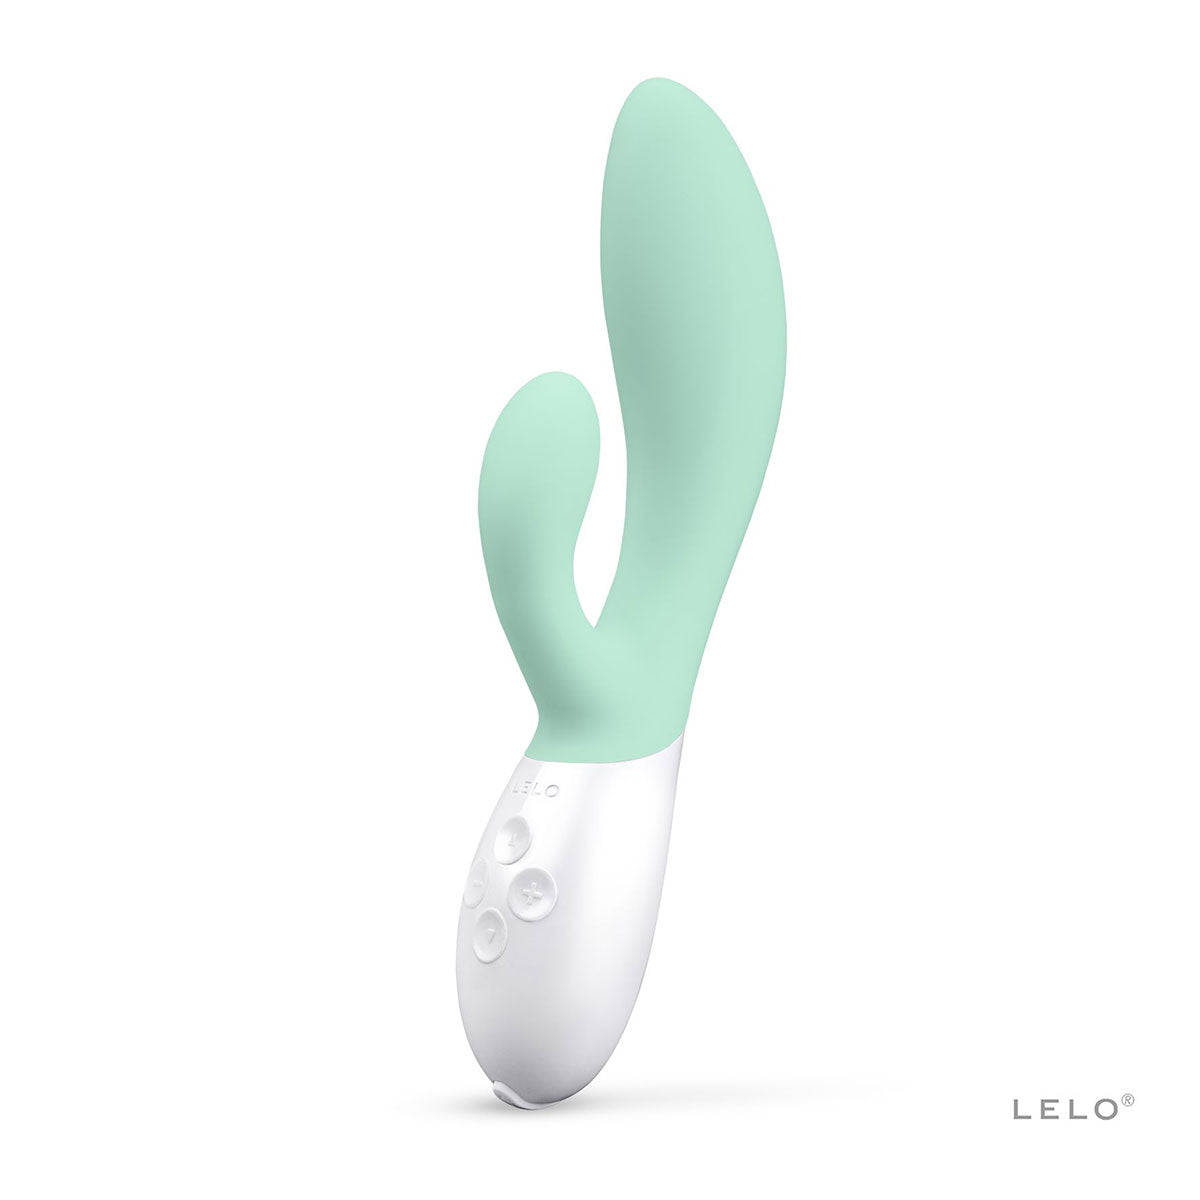 LELO Intimacy Devices LELO Ina 3 - Seaweed Green